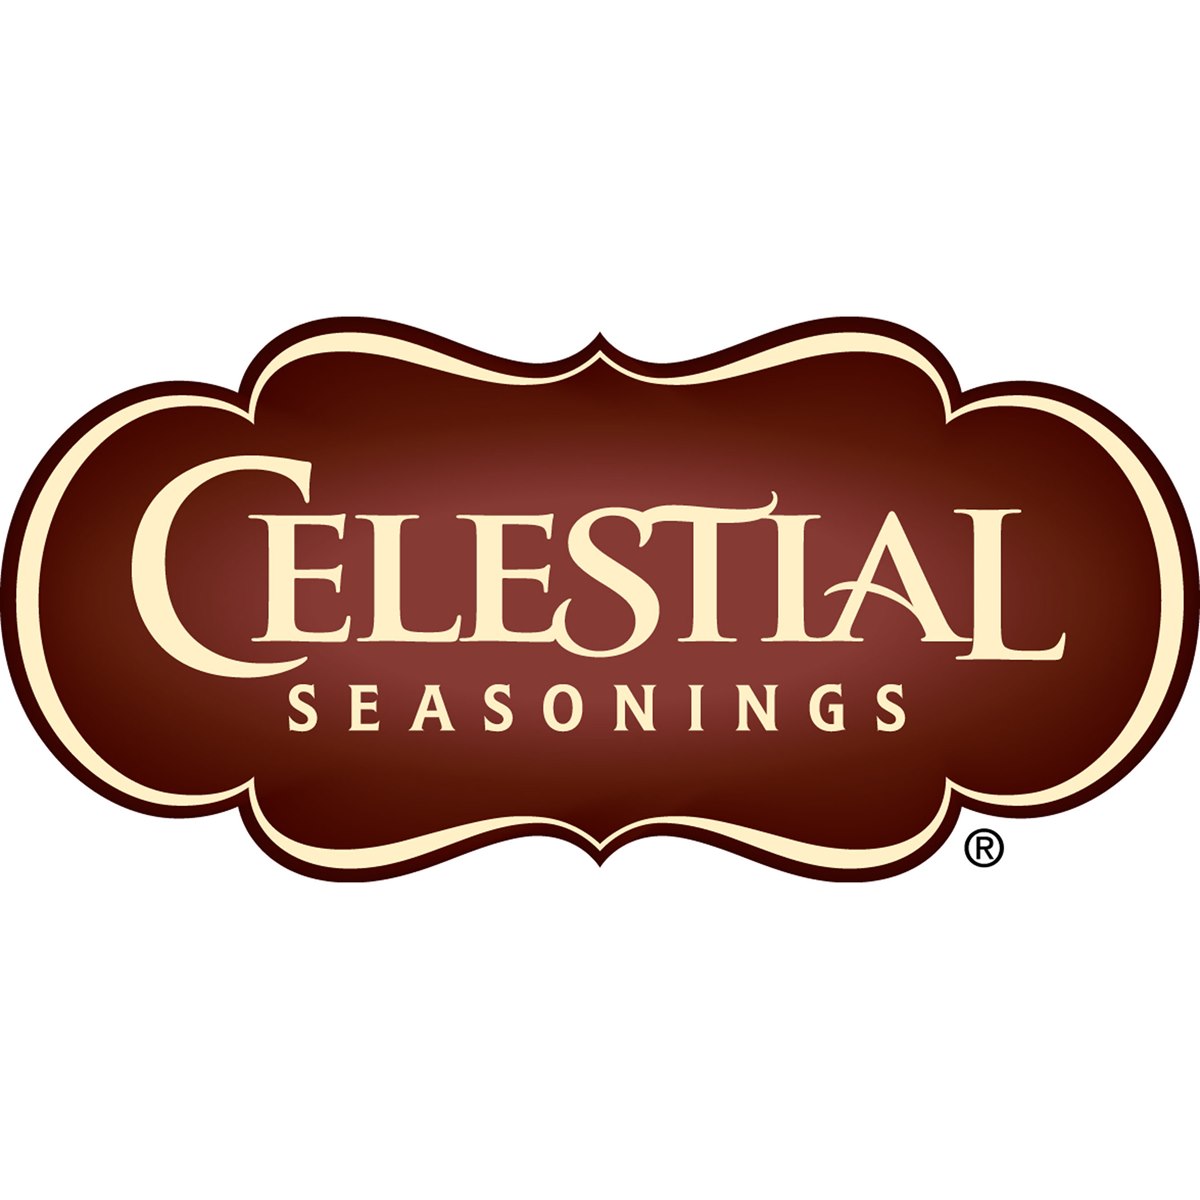 Where to Buy Celestial Seasonings Tea